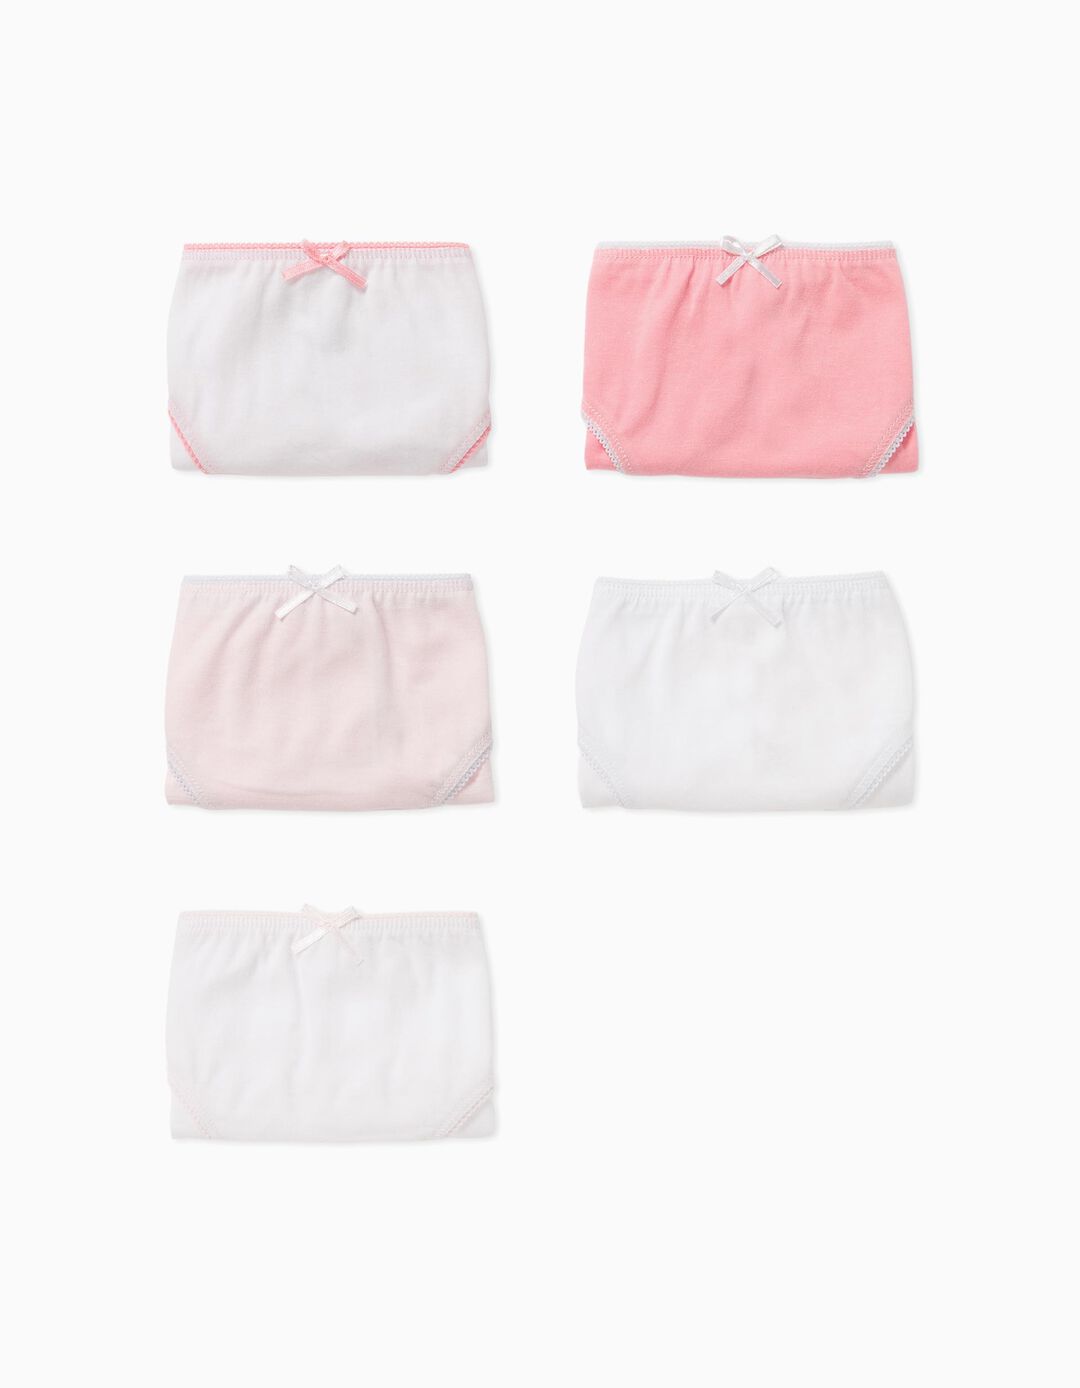 5 Briefs for Girls, Pink/White